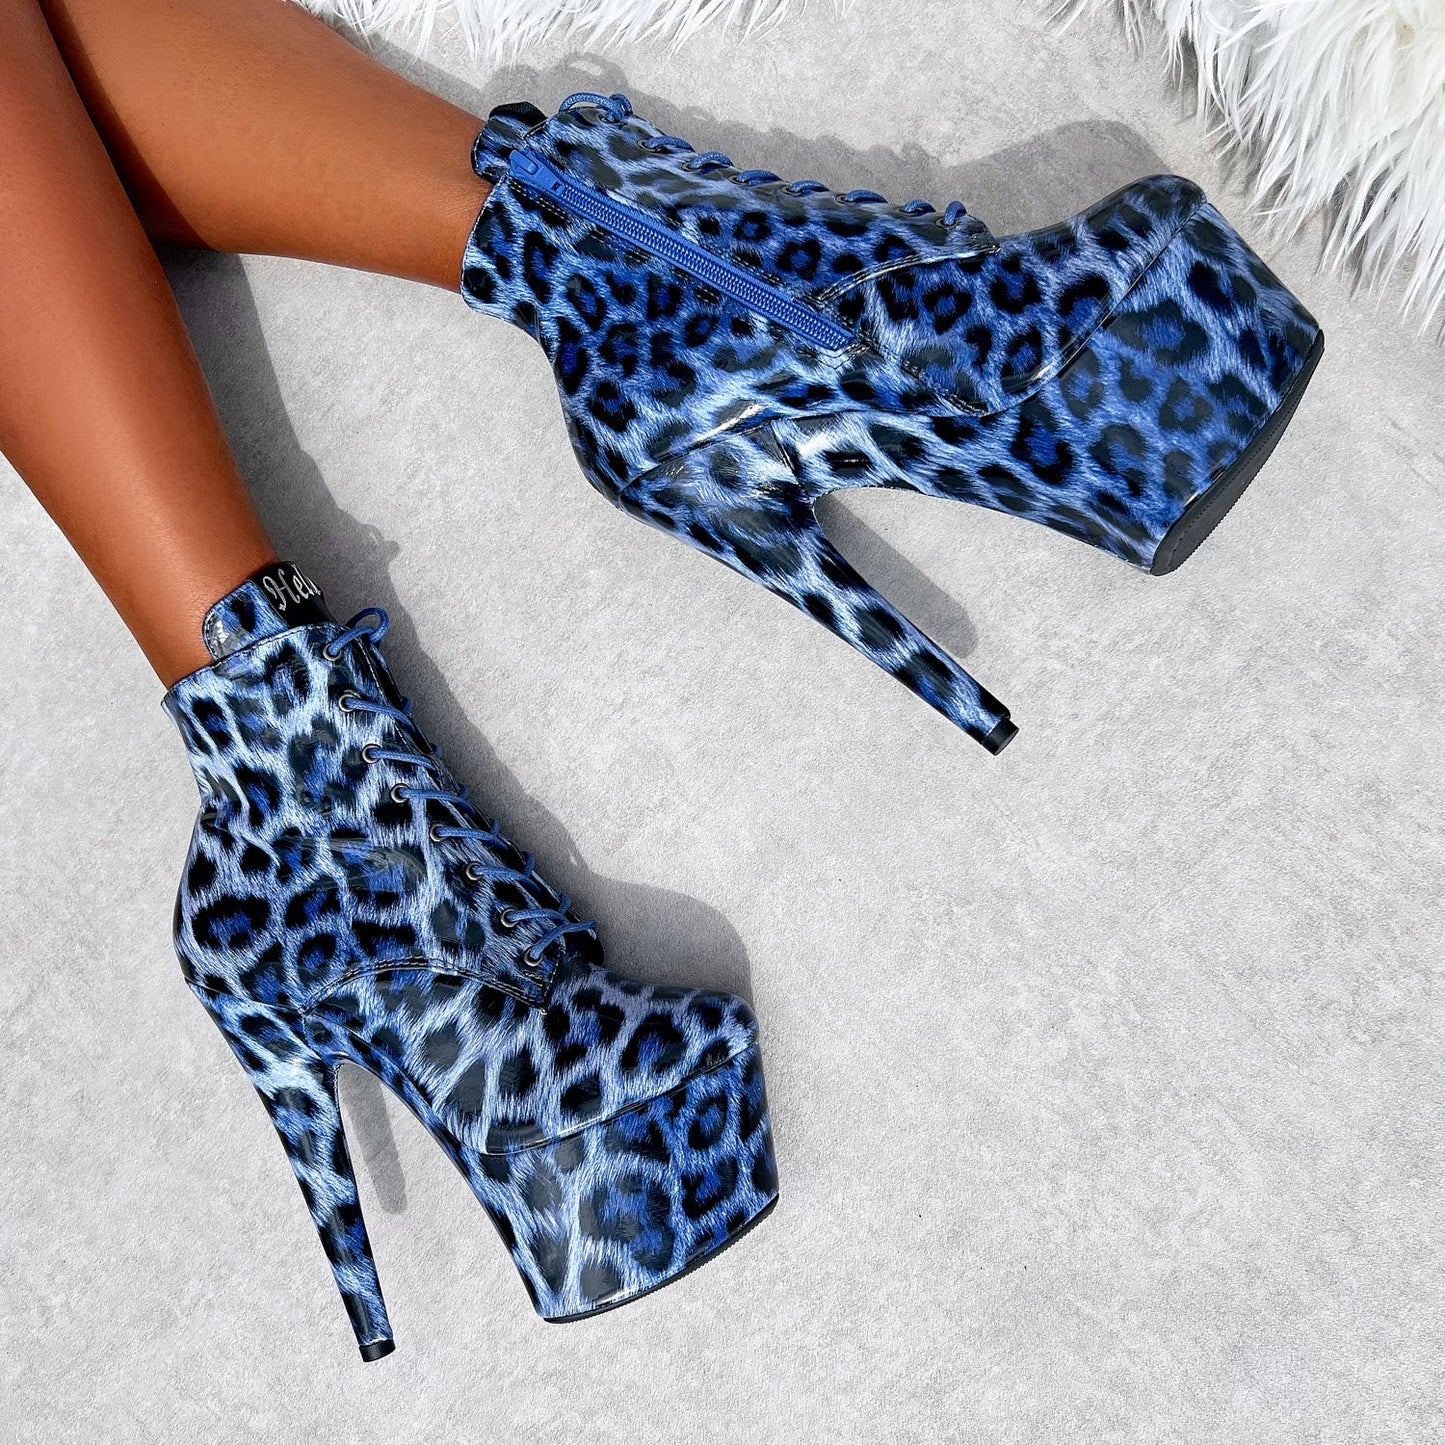 Blue Leopard Ankle Boot - 7 INCH, stripper shoe, stripper heel, pole heel, not a pleaser, platform, dancer, pole dance, floor work